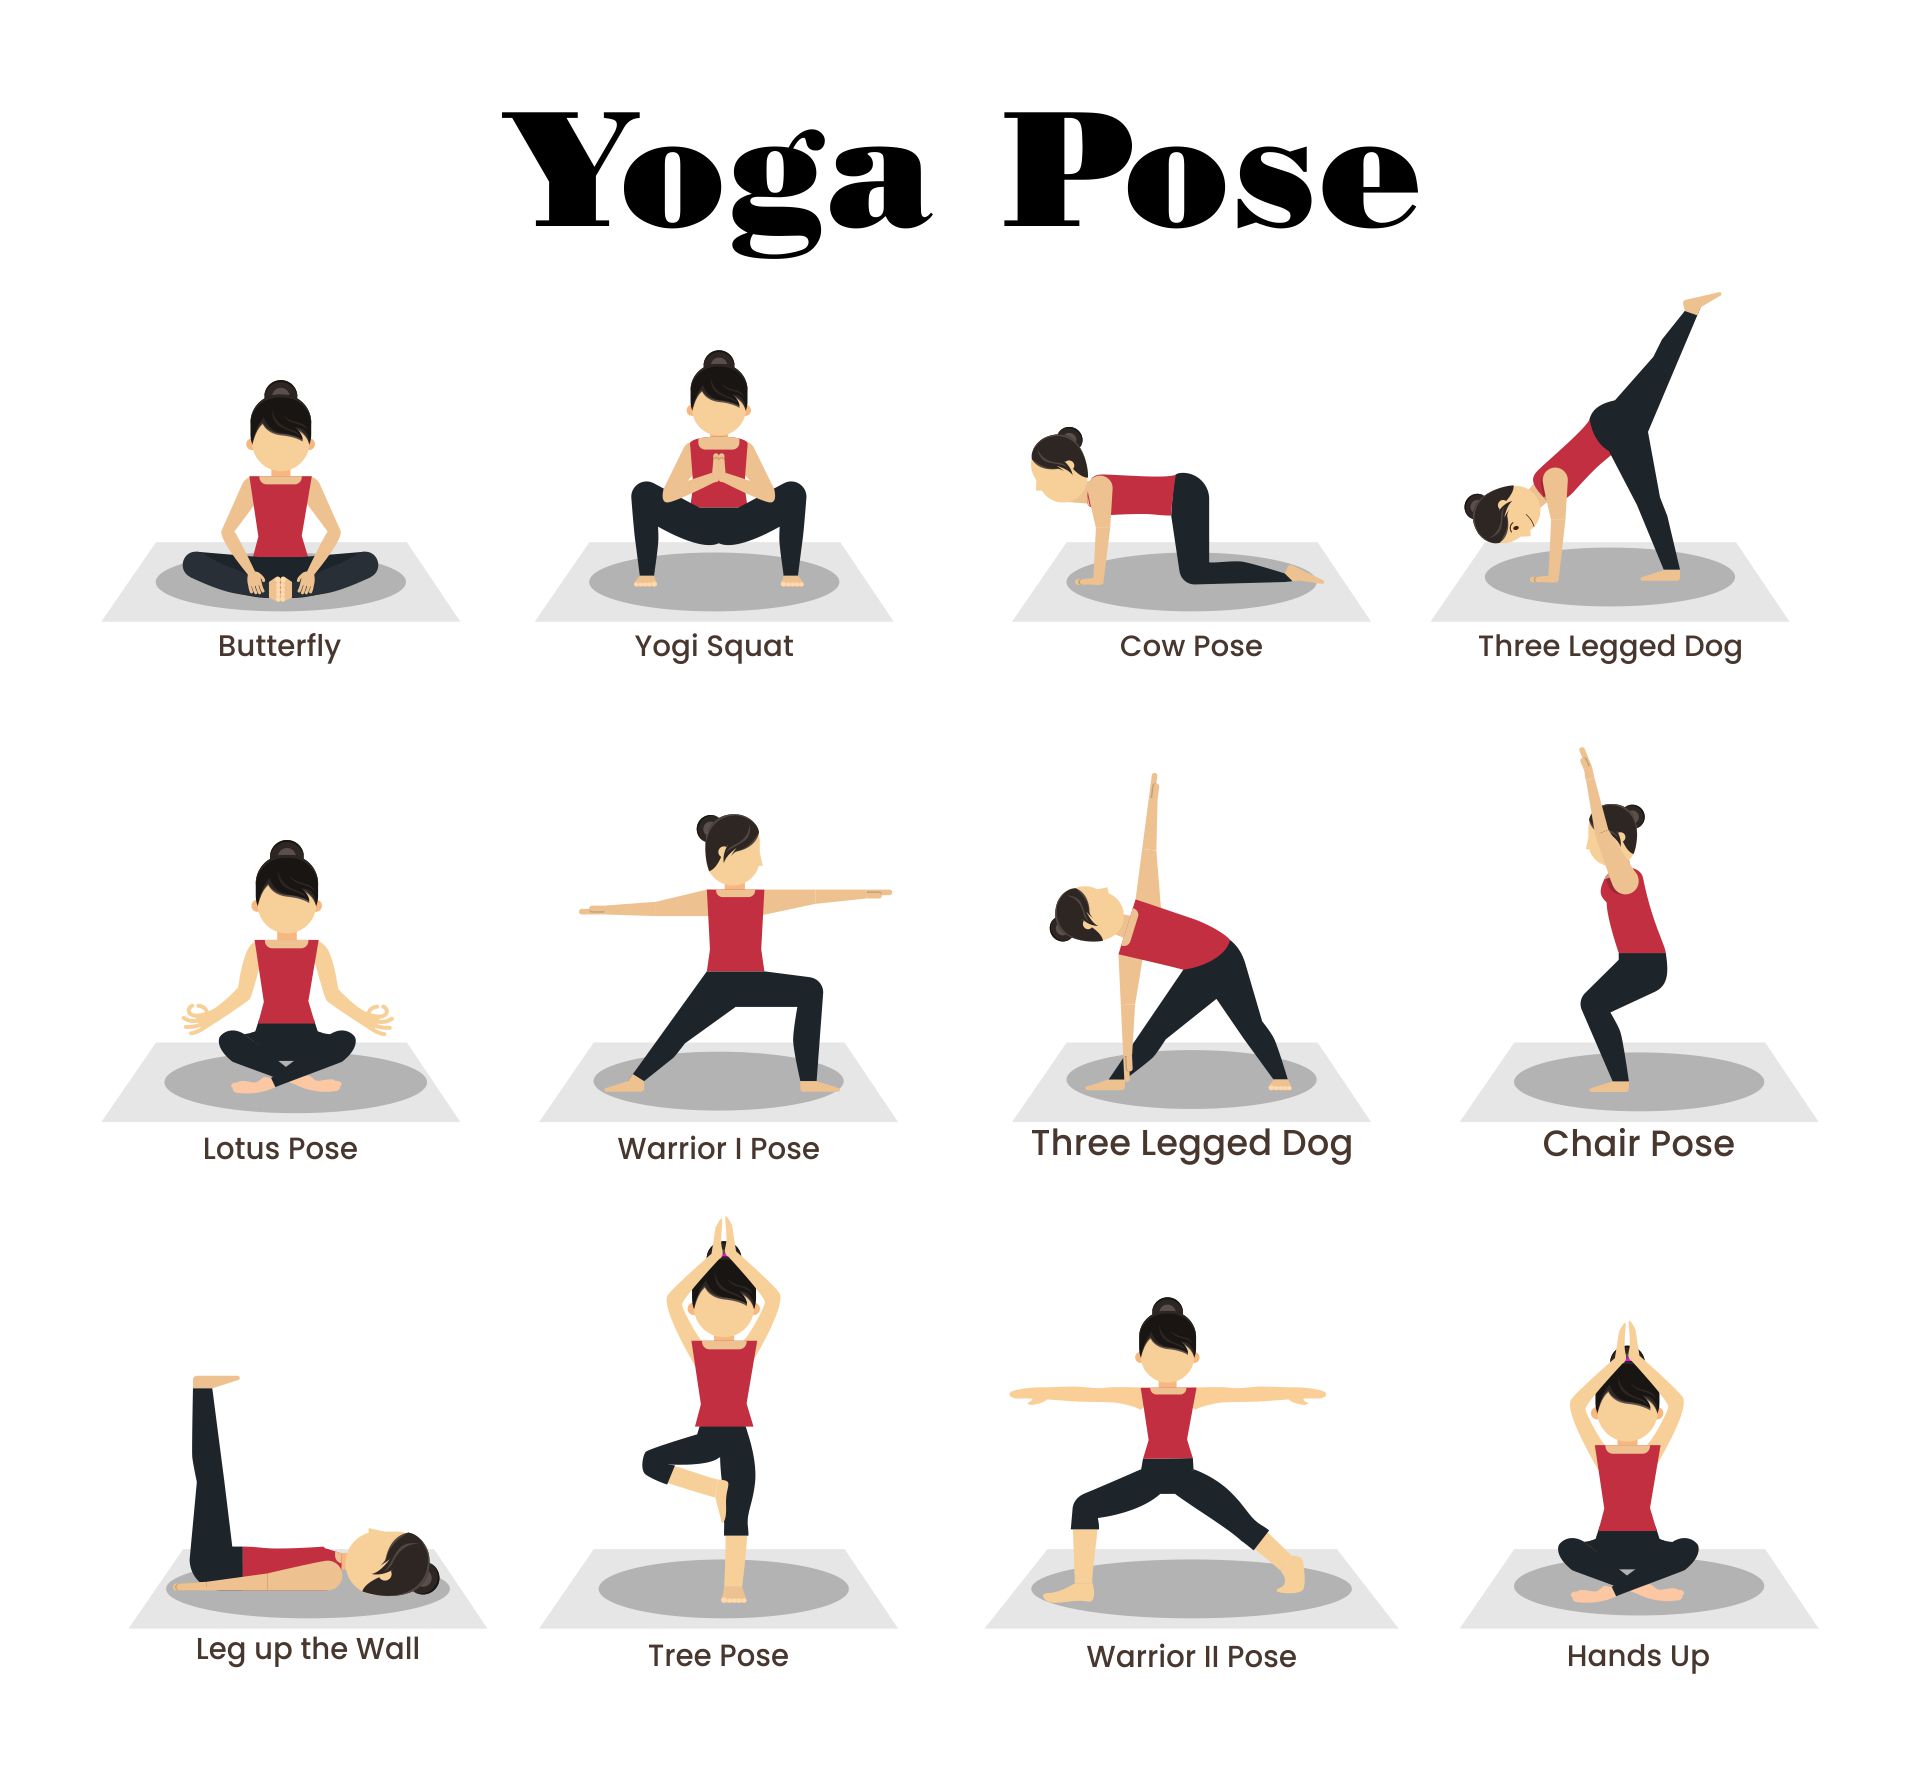 39. 26 Poses Of Bikram Yoga pdf | Bikram Yoga Teacher Training